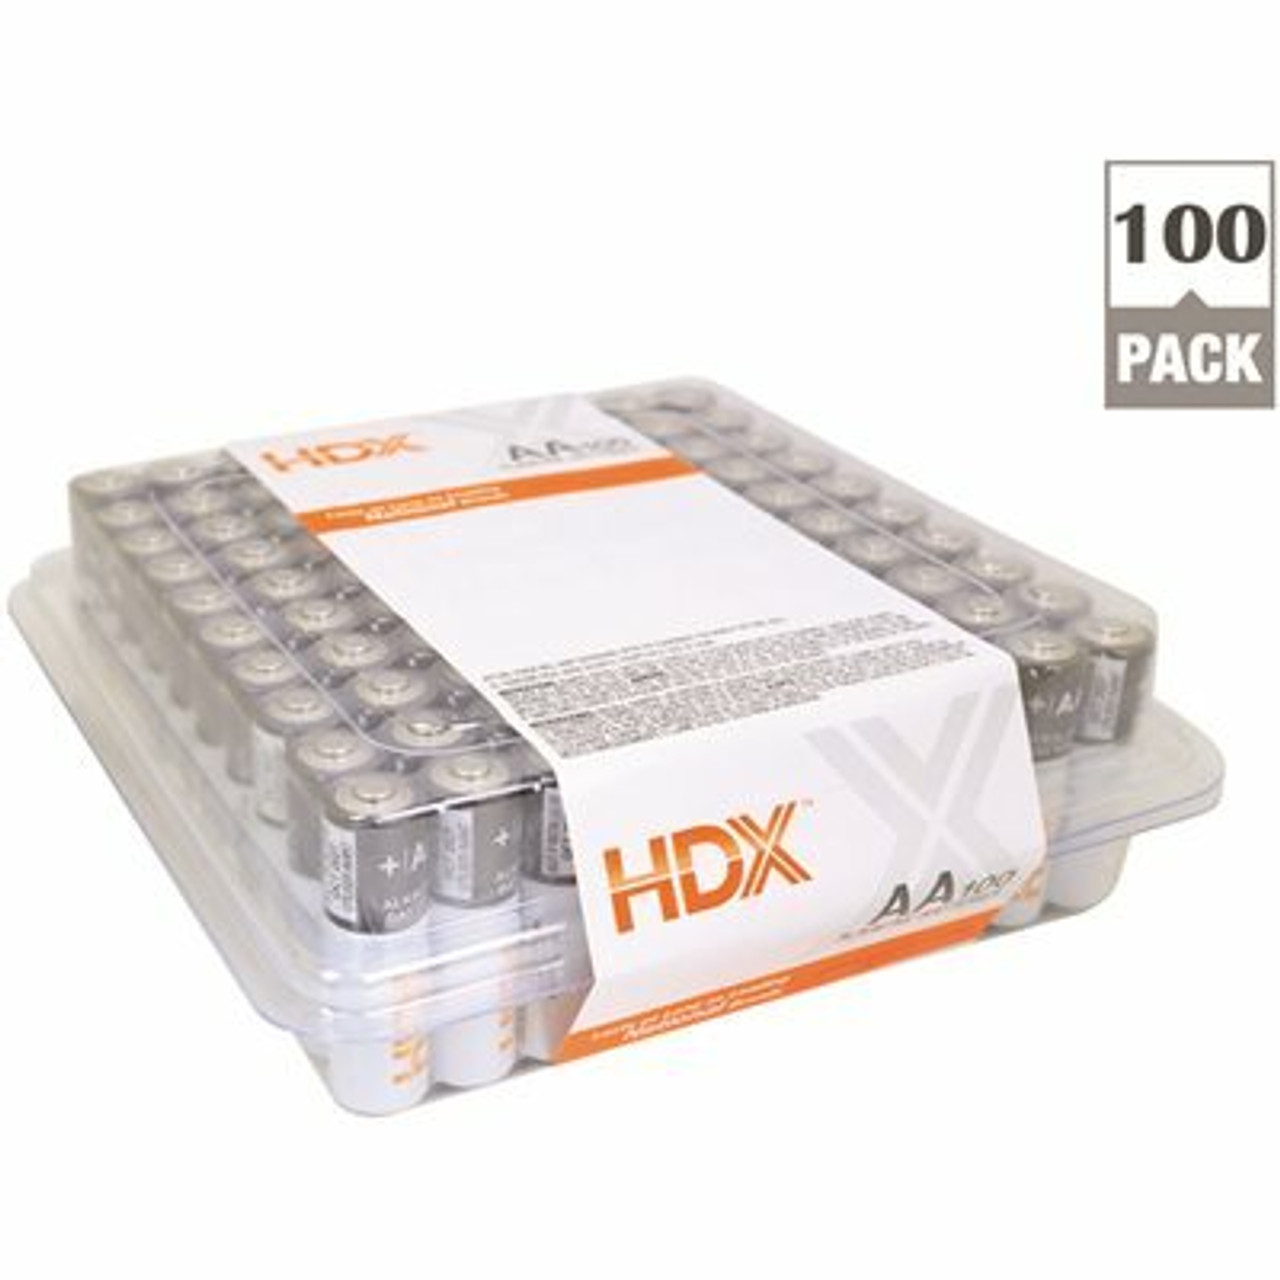 Hdx Alkaline Aa Battery (100-Pack)